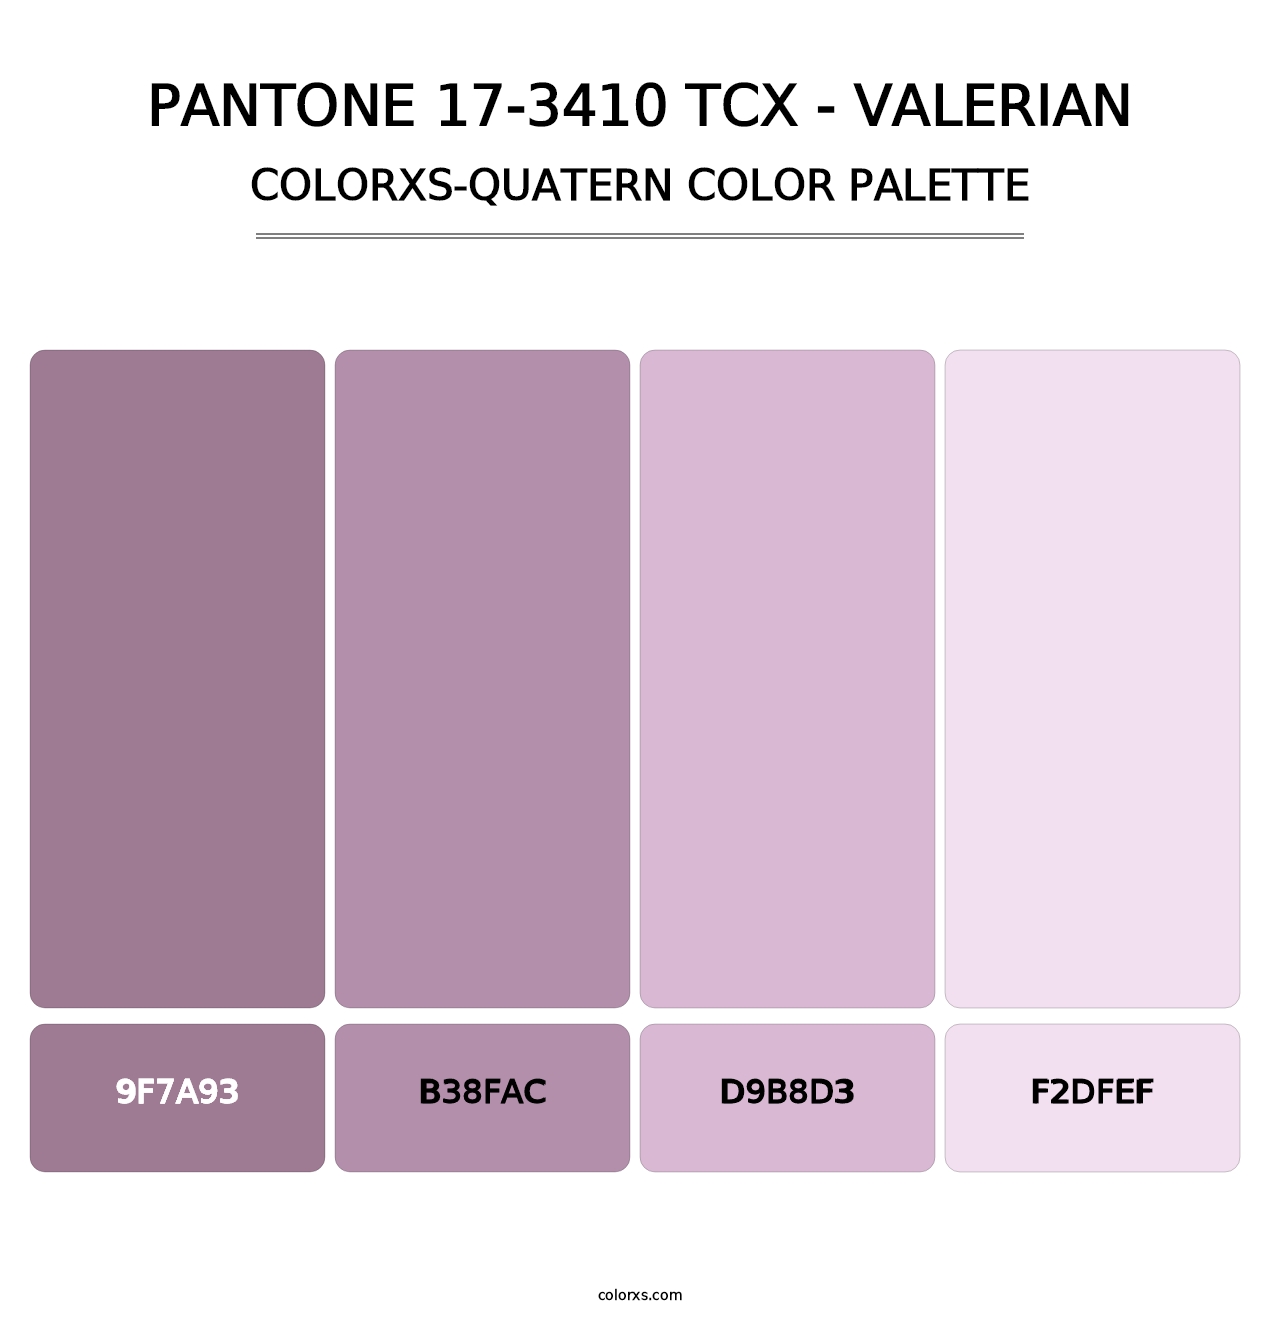 PANTONE 17-3410 TCX - Valerian - Colorxs Quatern Palette